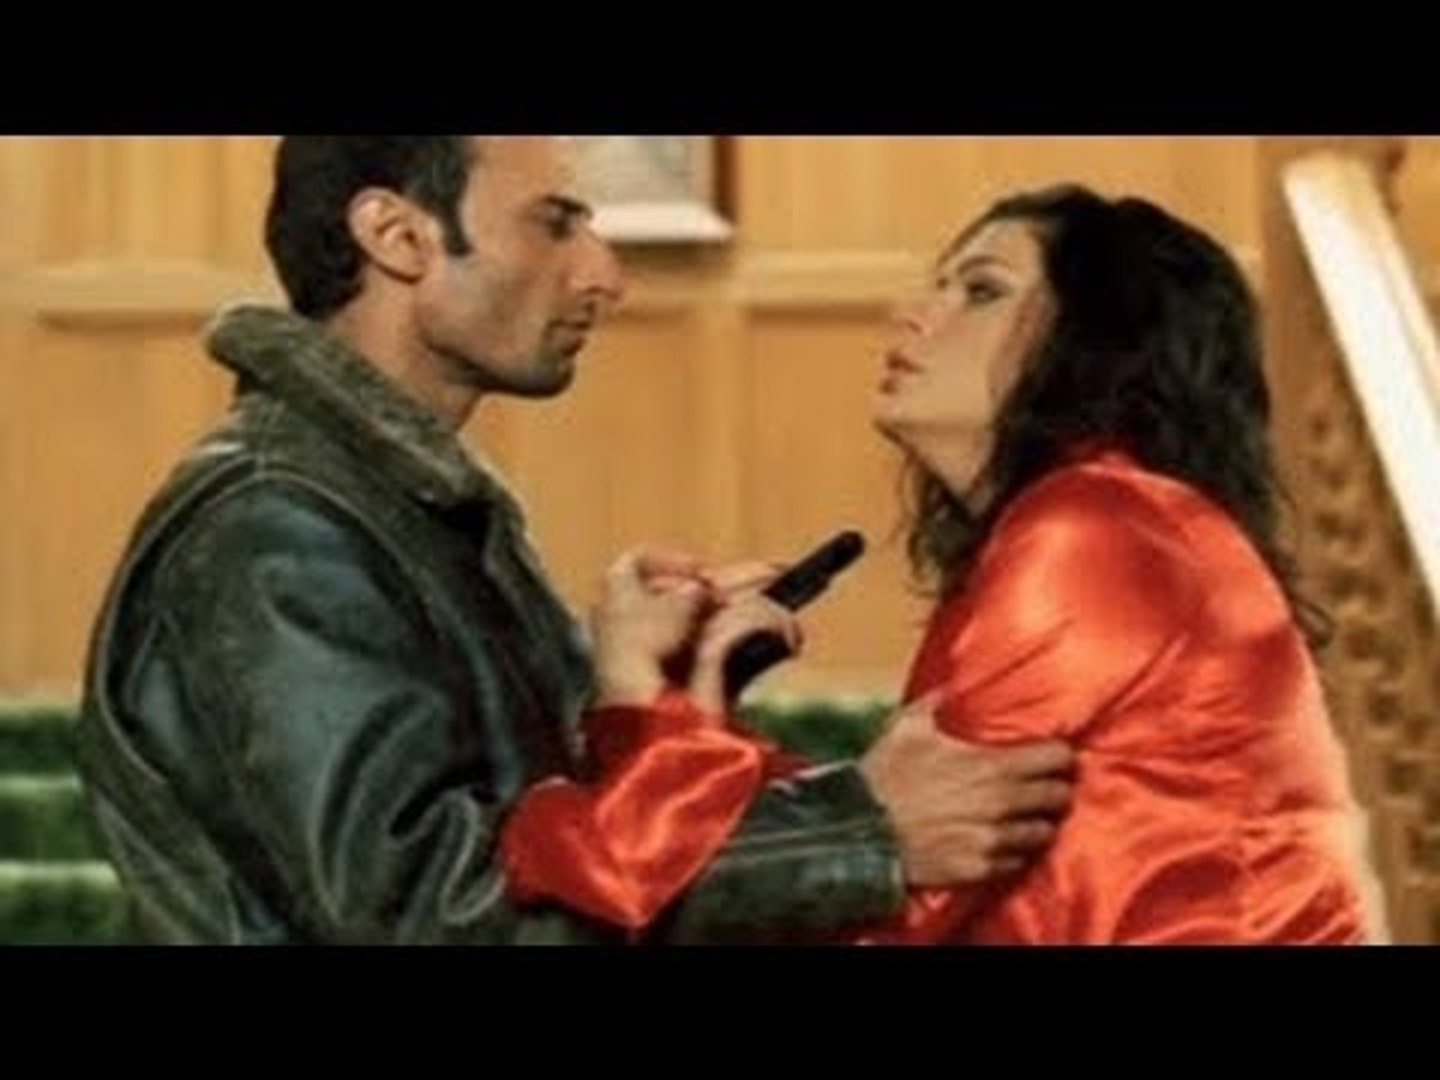 H0t DRUNK Russian GIRL SEDUCING Cape Karma Bollywood Sex Thriller